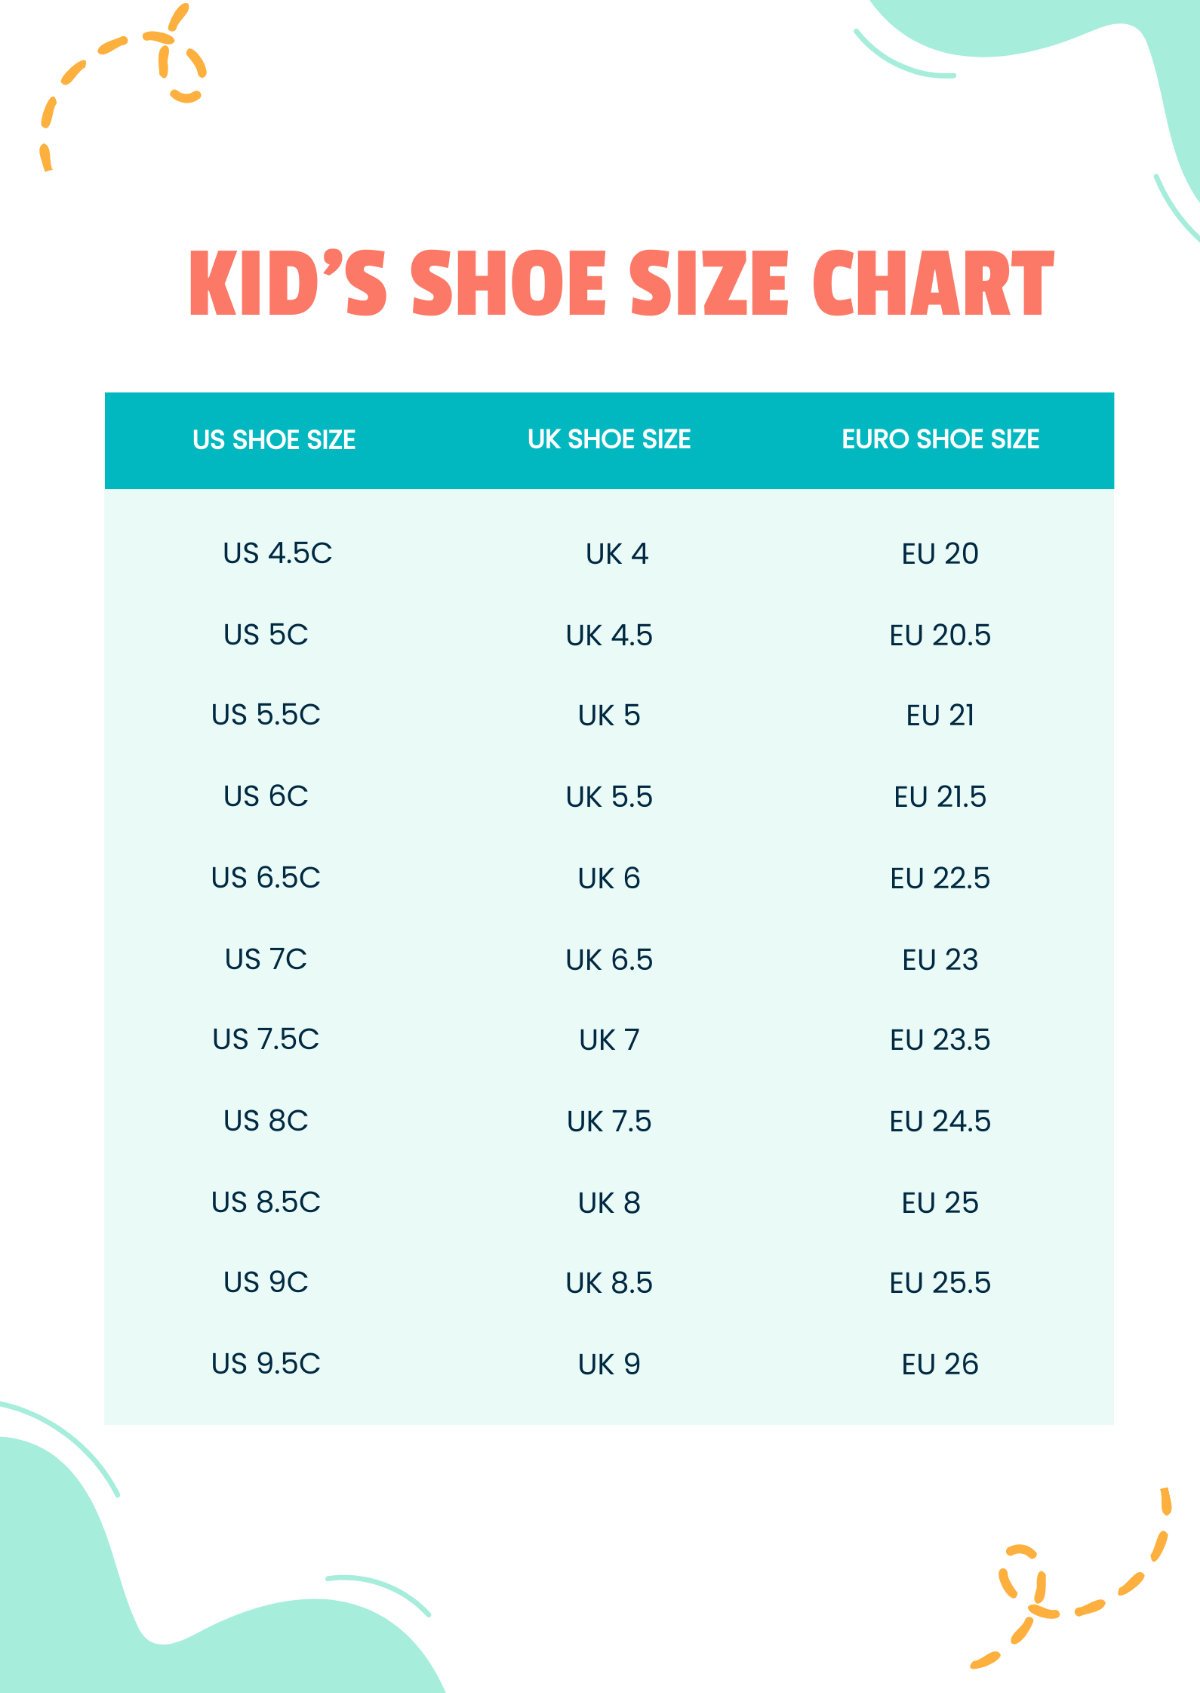 Kids' Shoe Size Chart Template